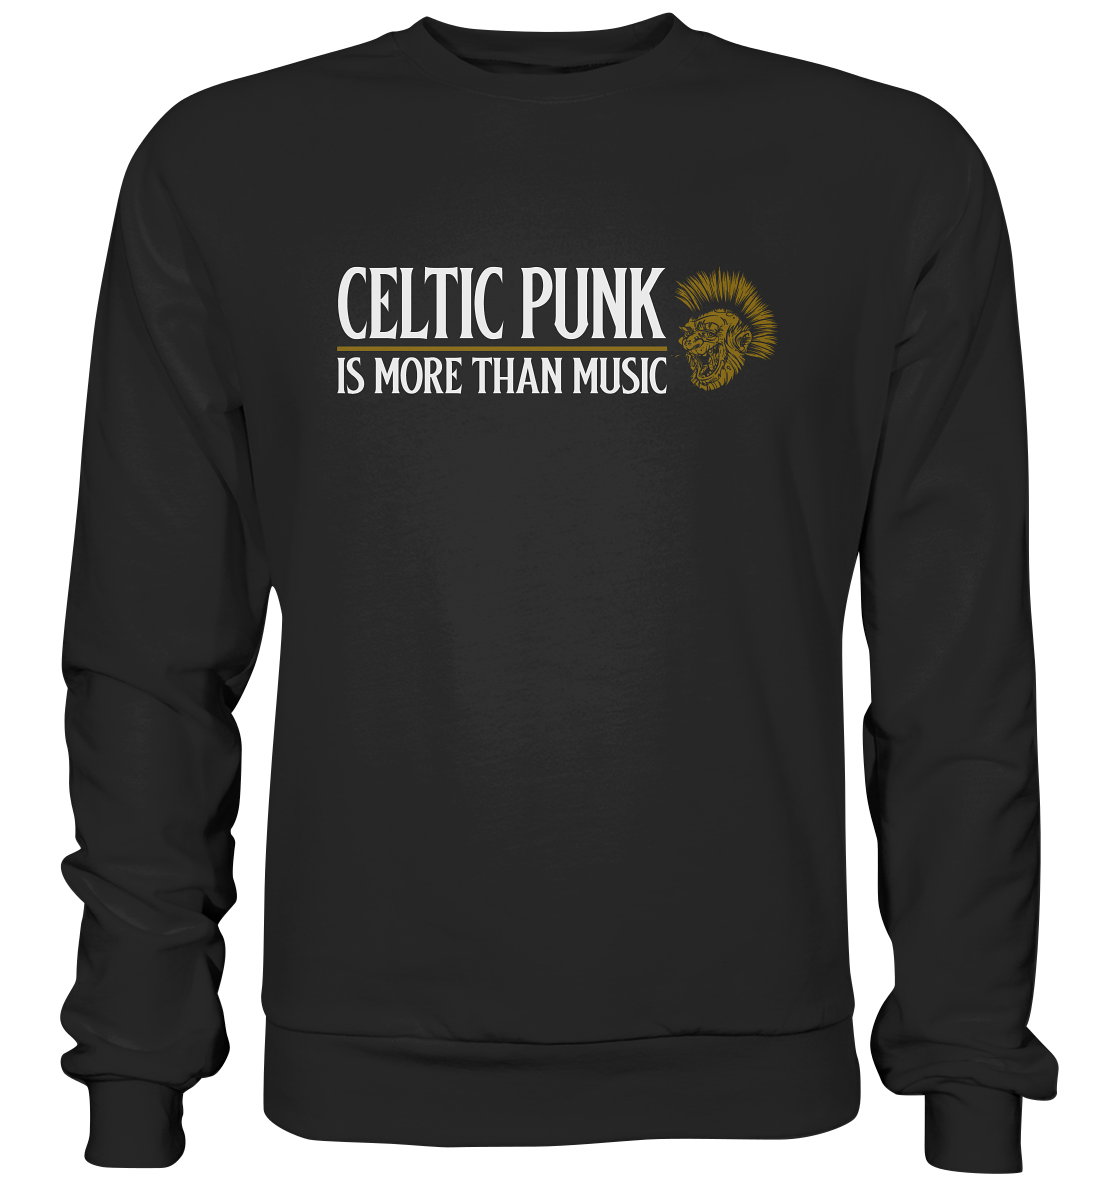 Celtic Punk "Is More Than Music" - Premium Sweatshirt